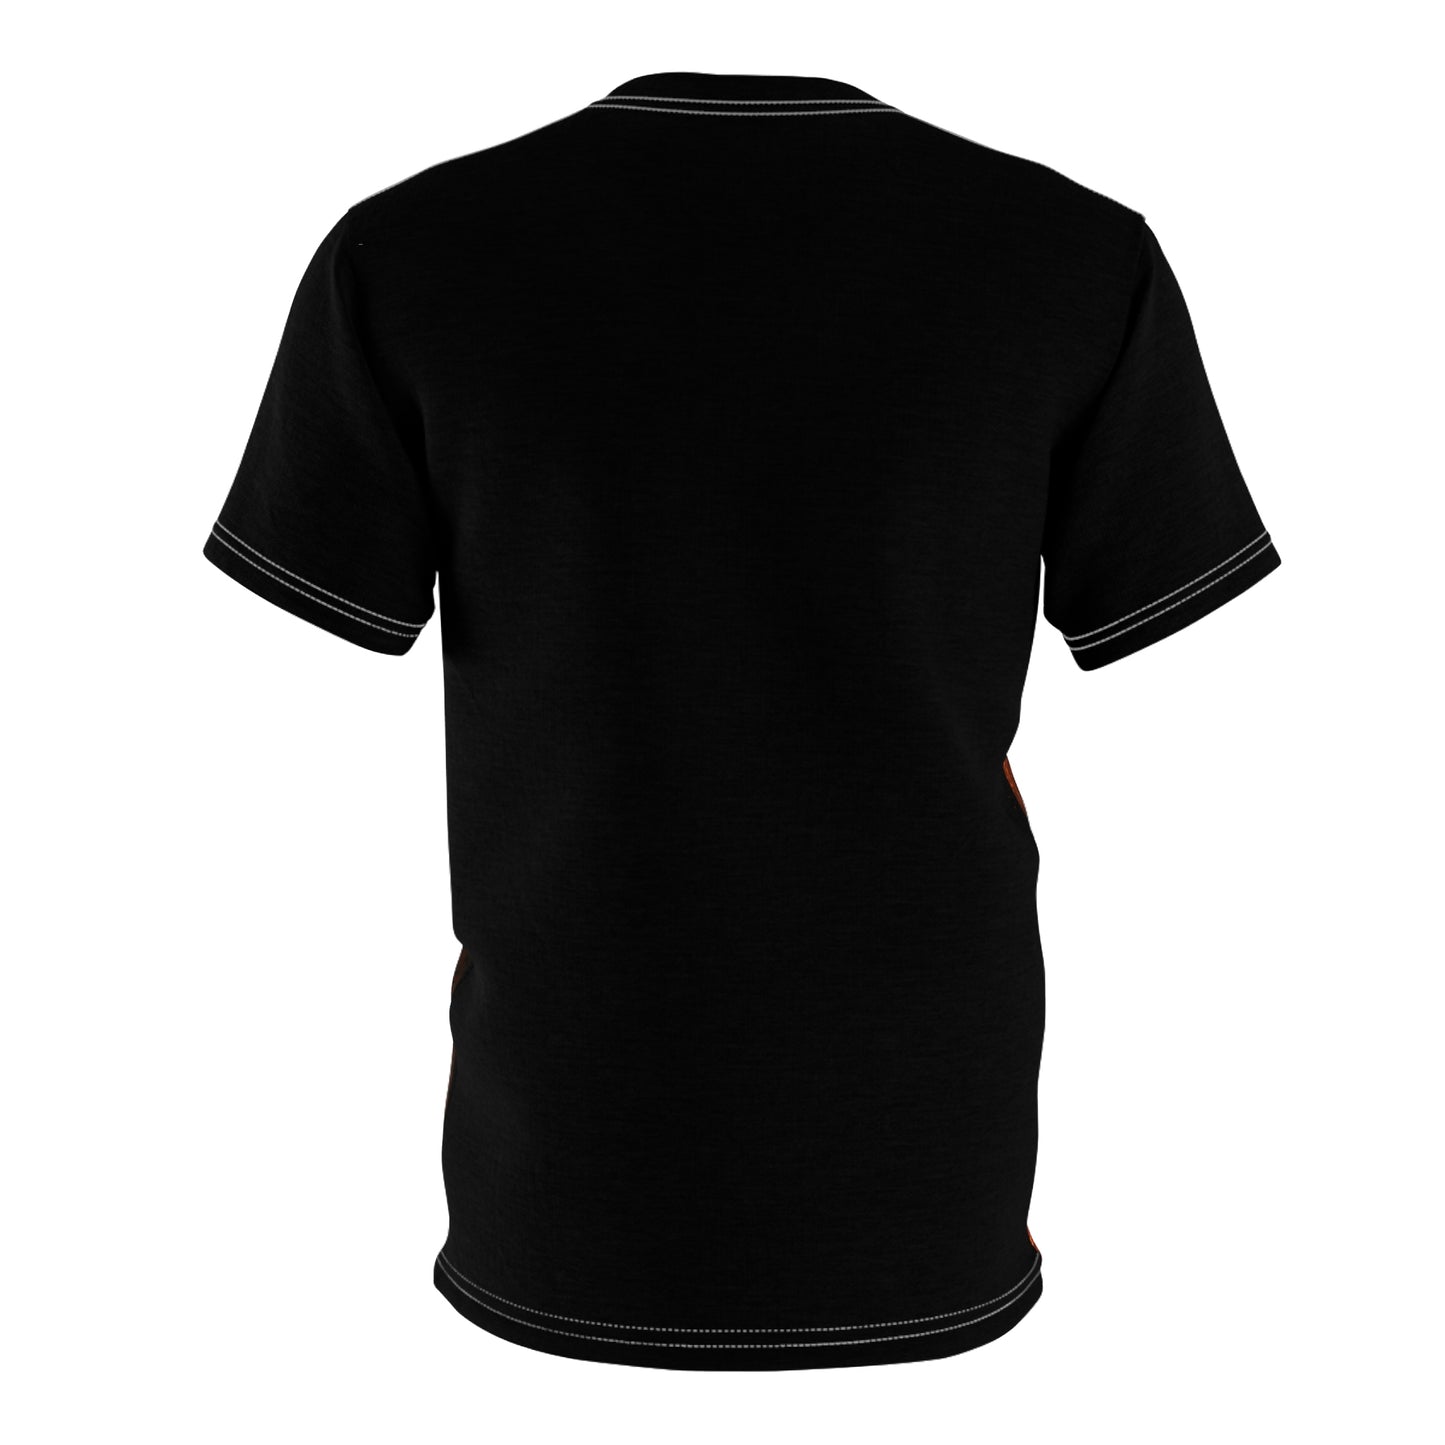 Sinistrari - Unisex All-Over Print Cut & Sew T-Shirt